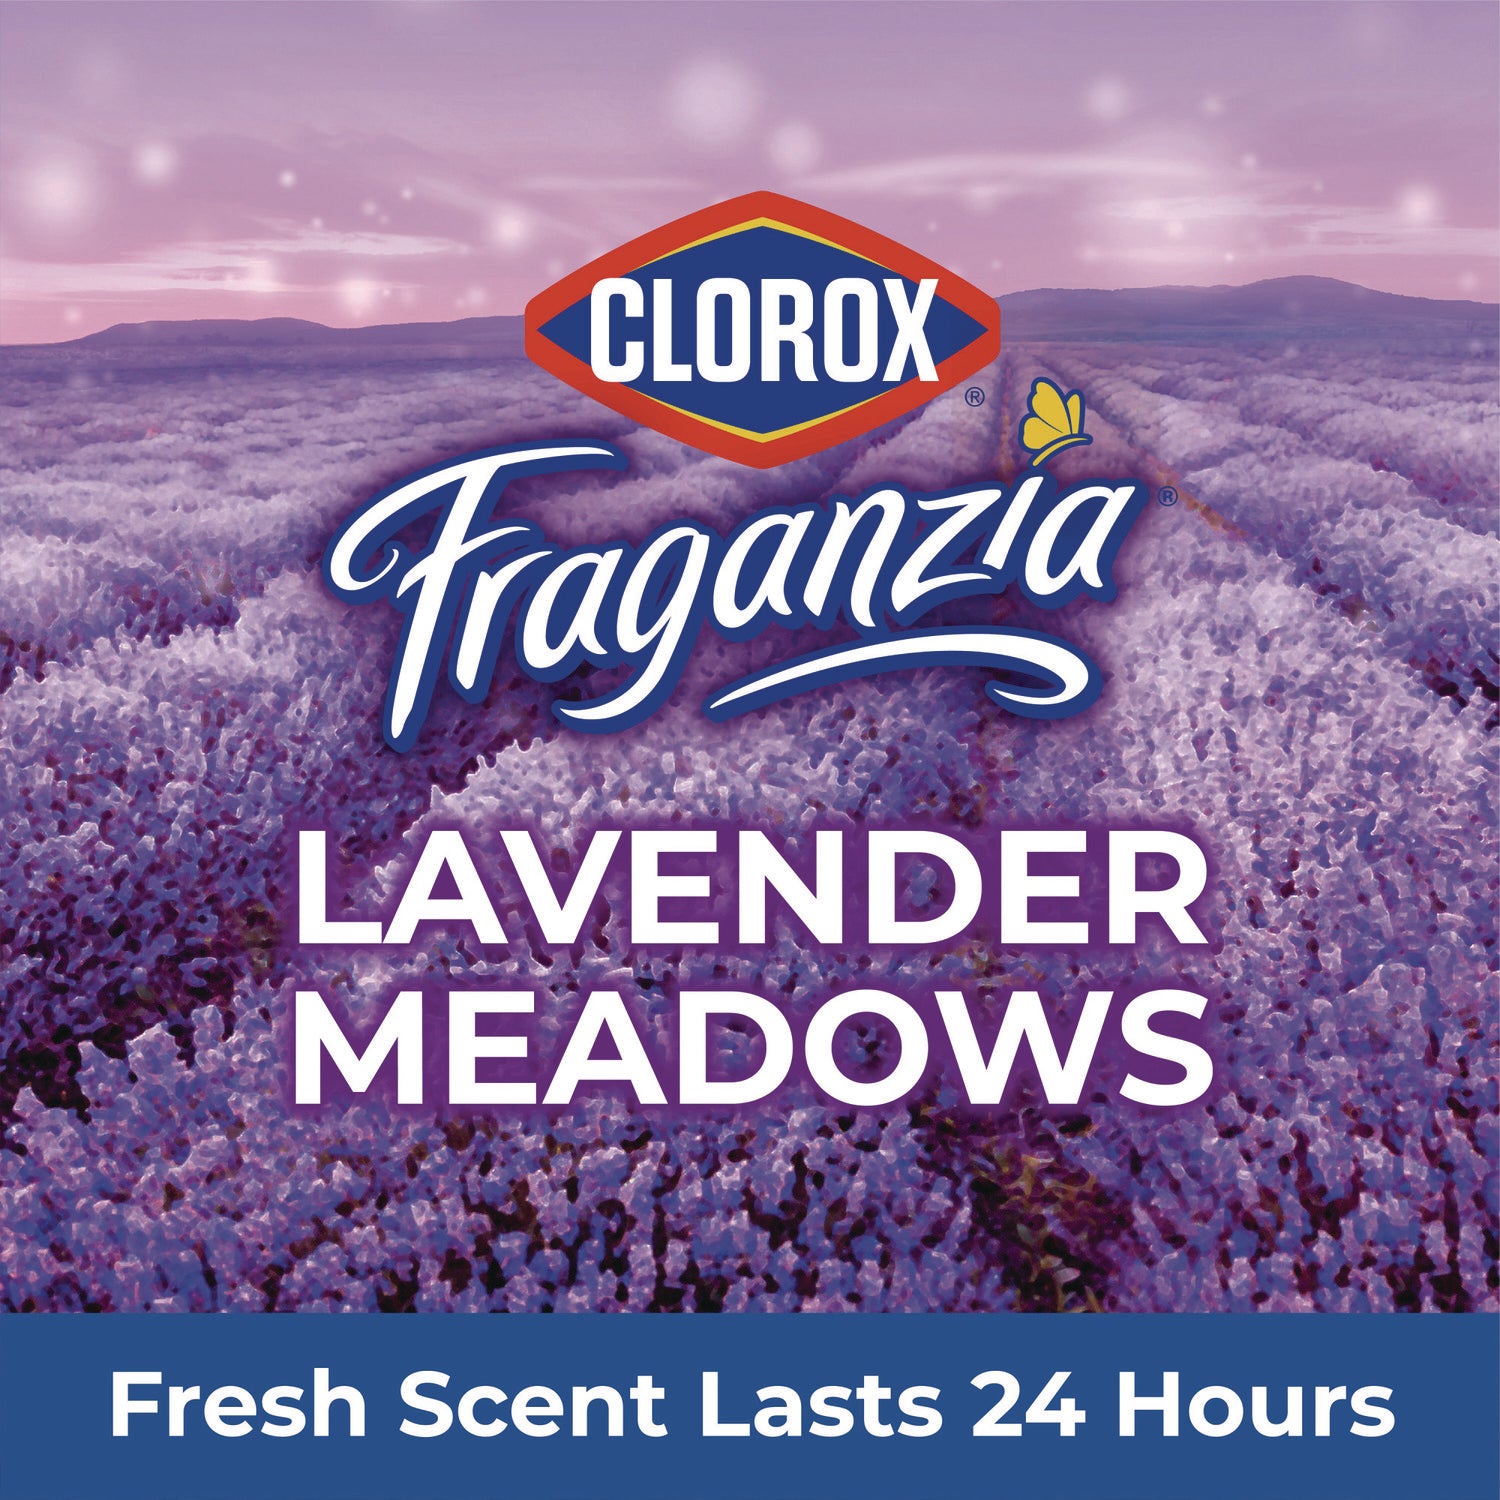 CloroxPro Fraganzia Multi-Purpose Cleaner Concentrate, Lavender Meadows Scent, 175 oz Bottle, 3/Carton - 7